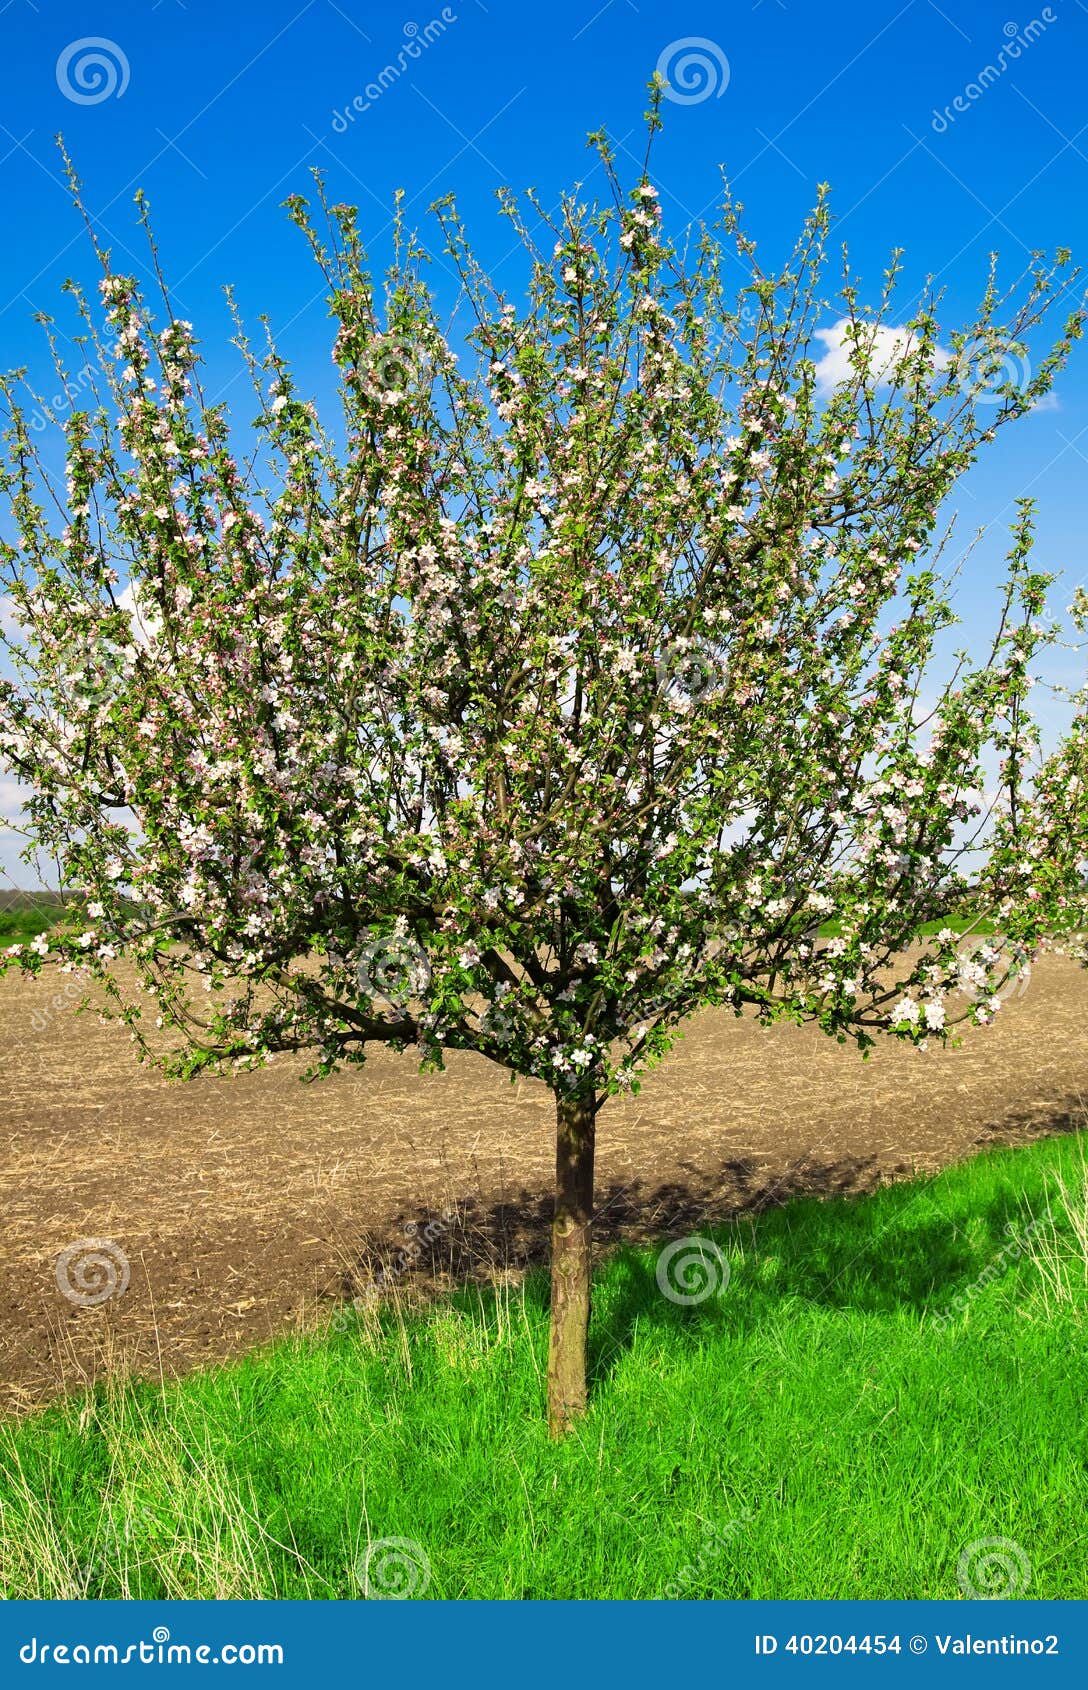 Blooming apple tree at spring